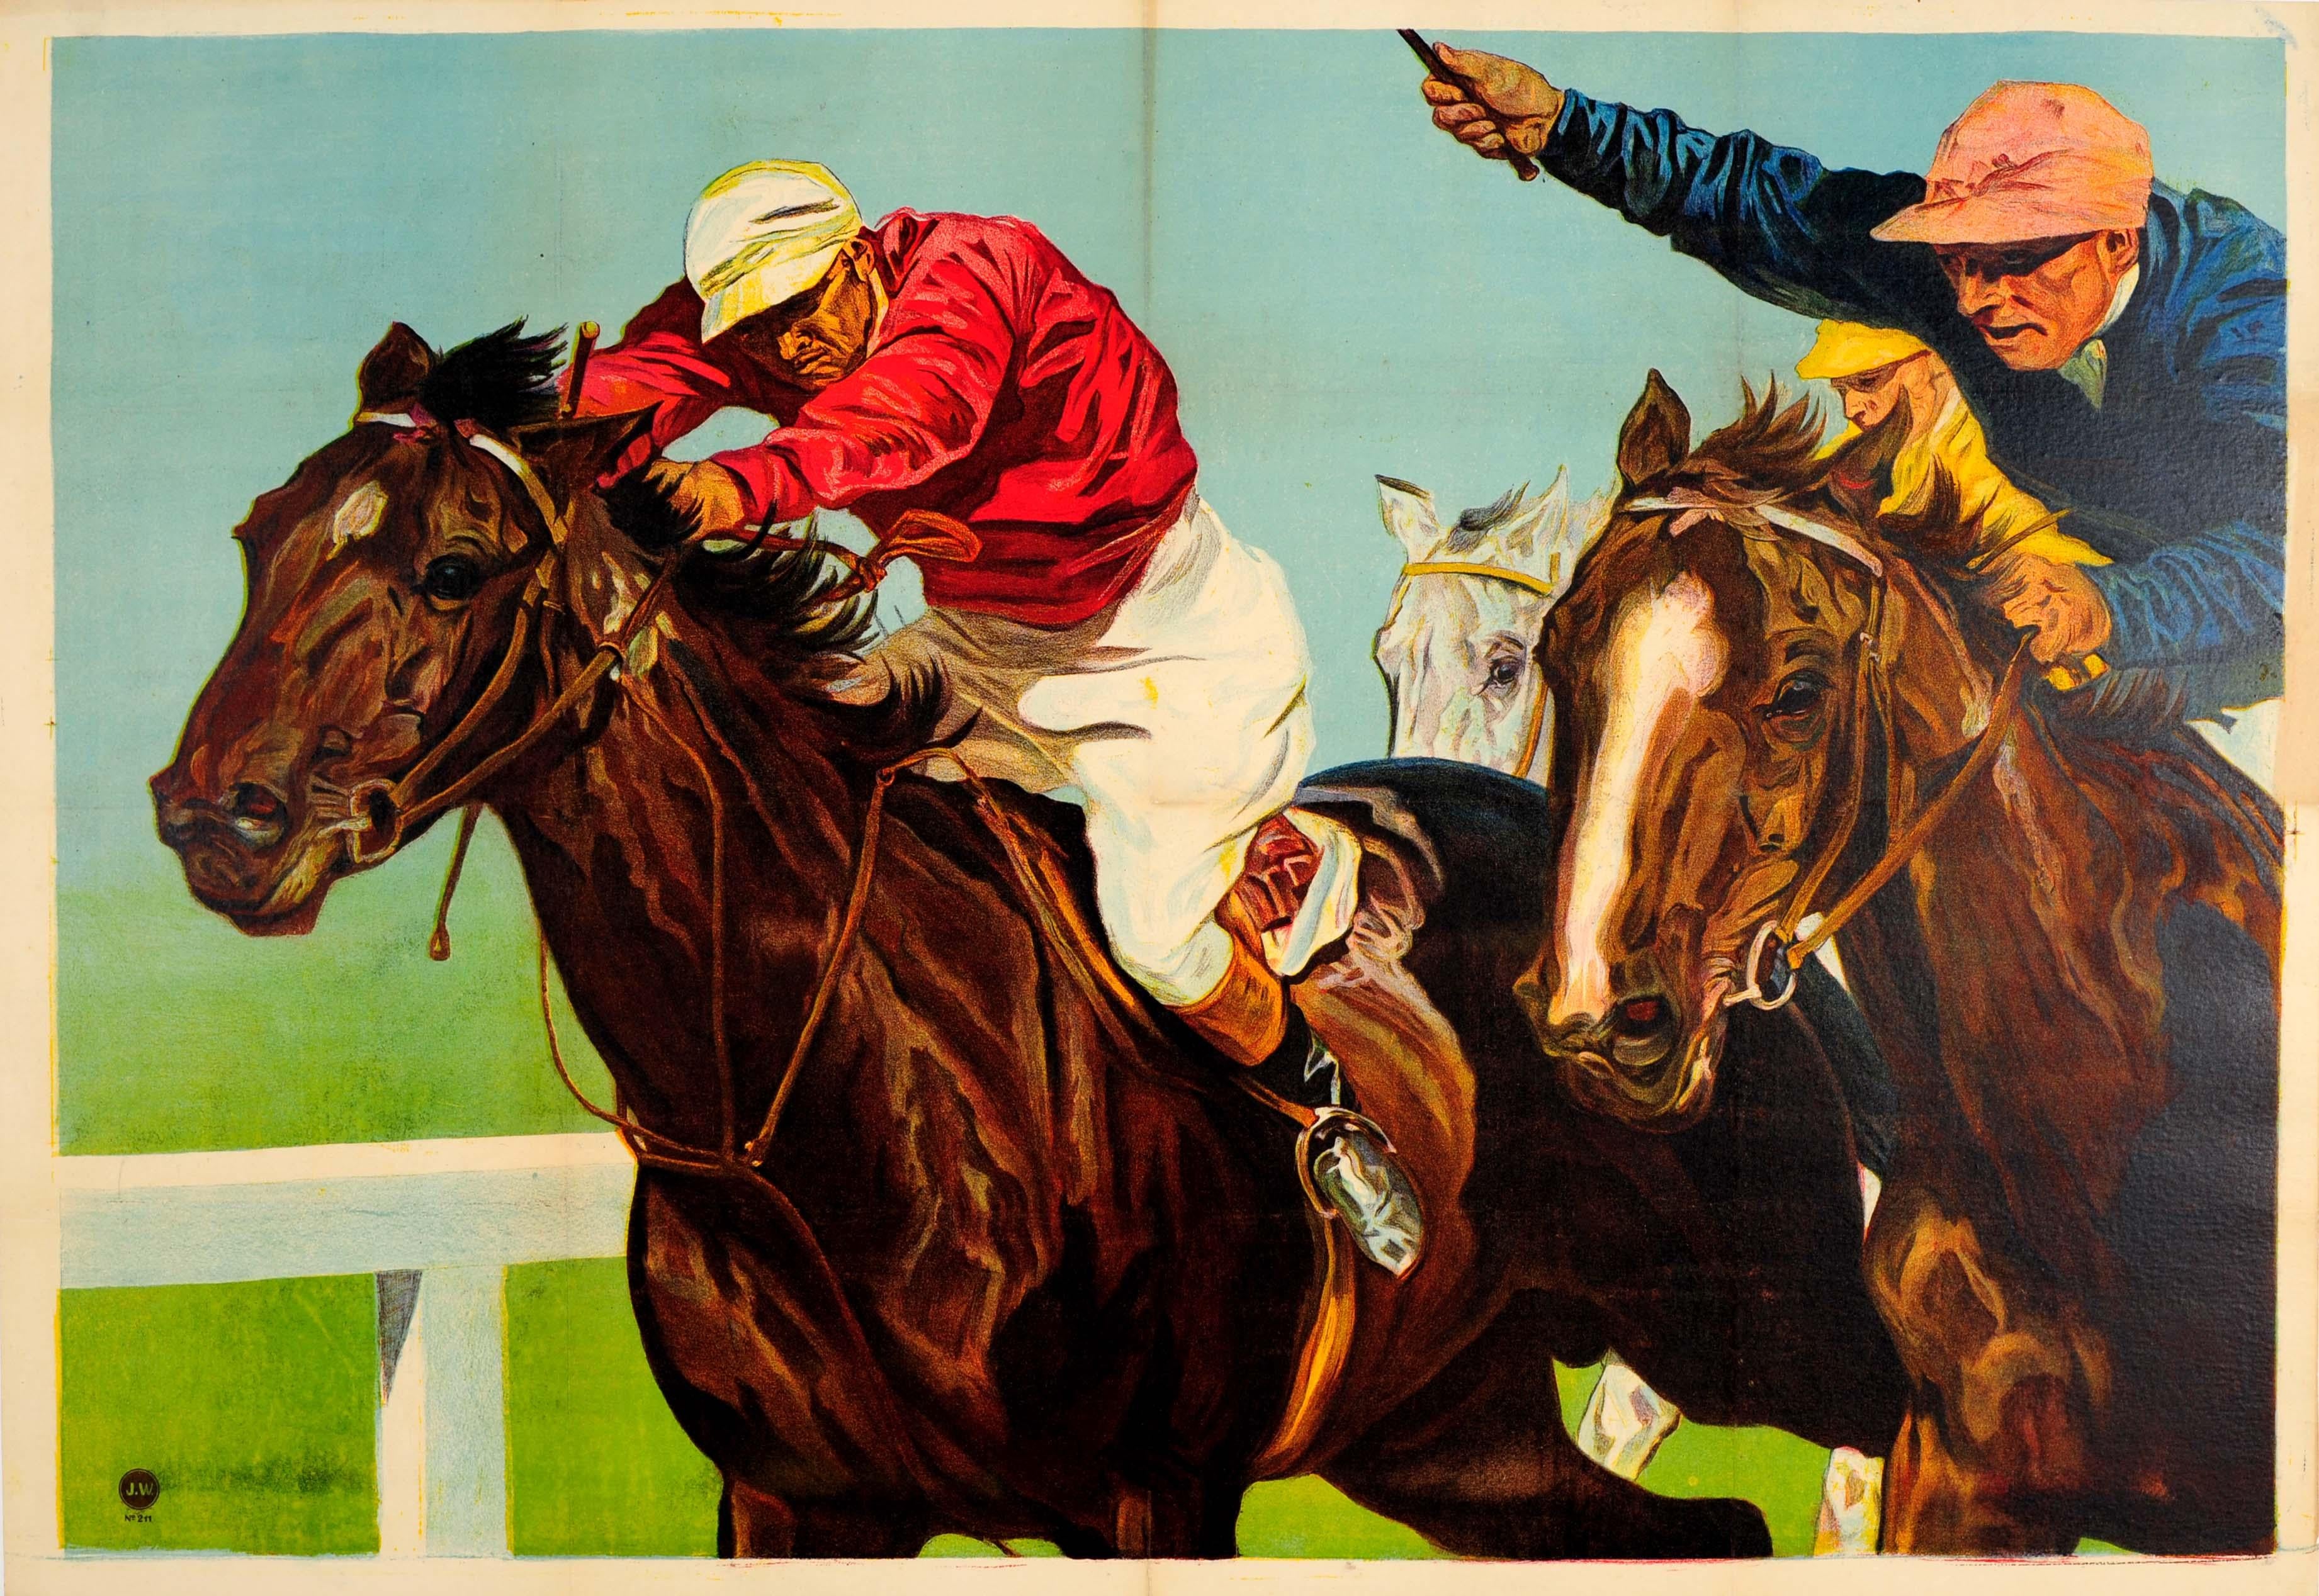 Unknown Print - Original Vintage Horse Racing Sport Poster Ft. Painting Of Jockeys In Horse Race